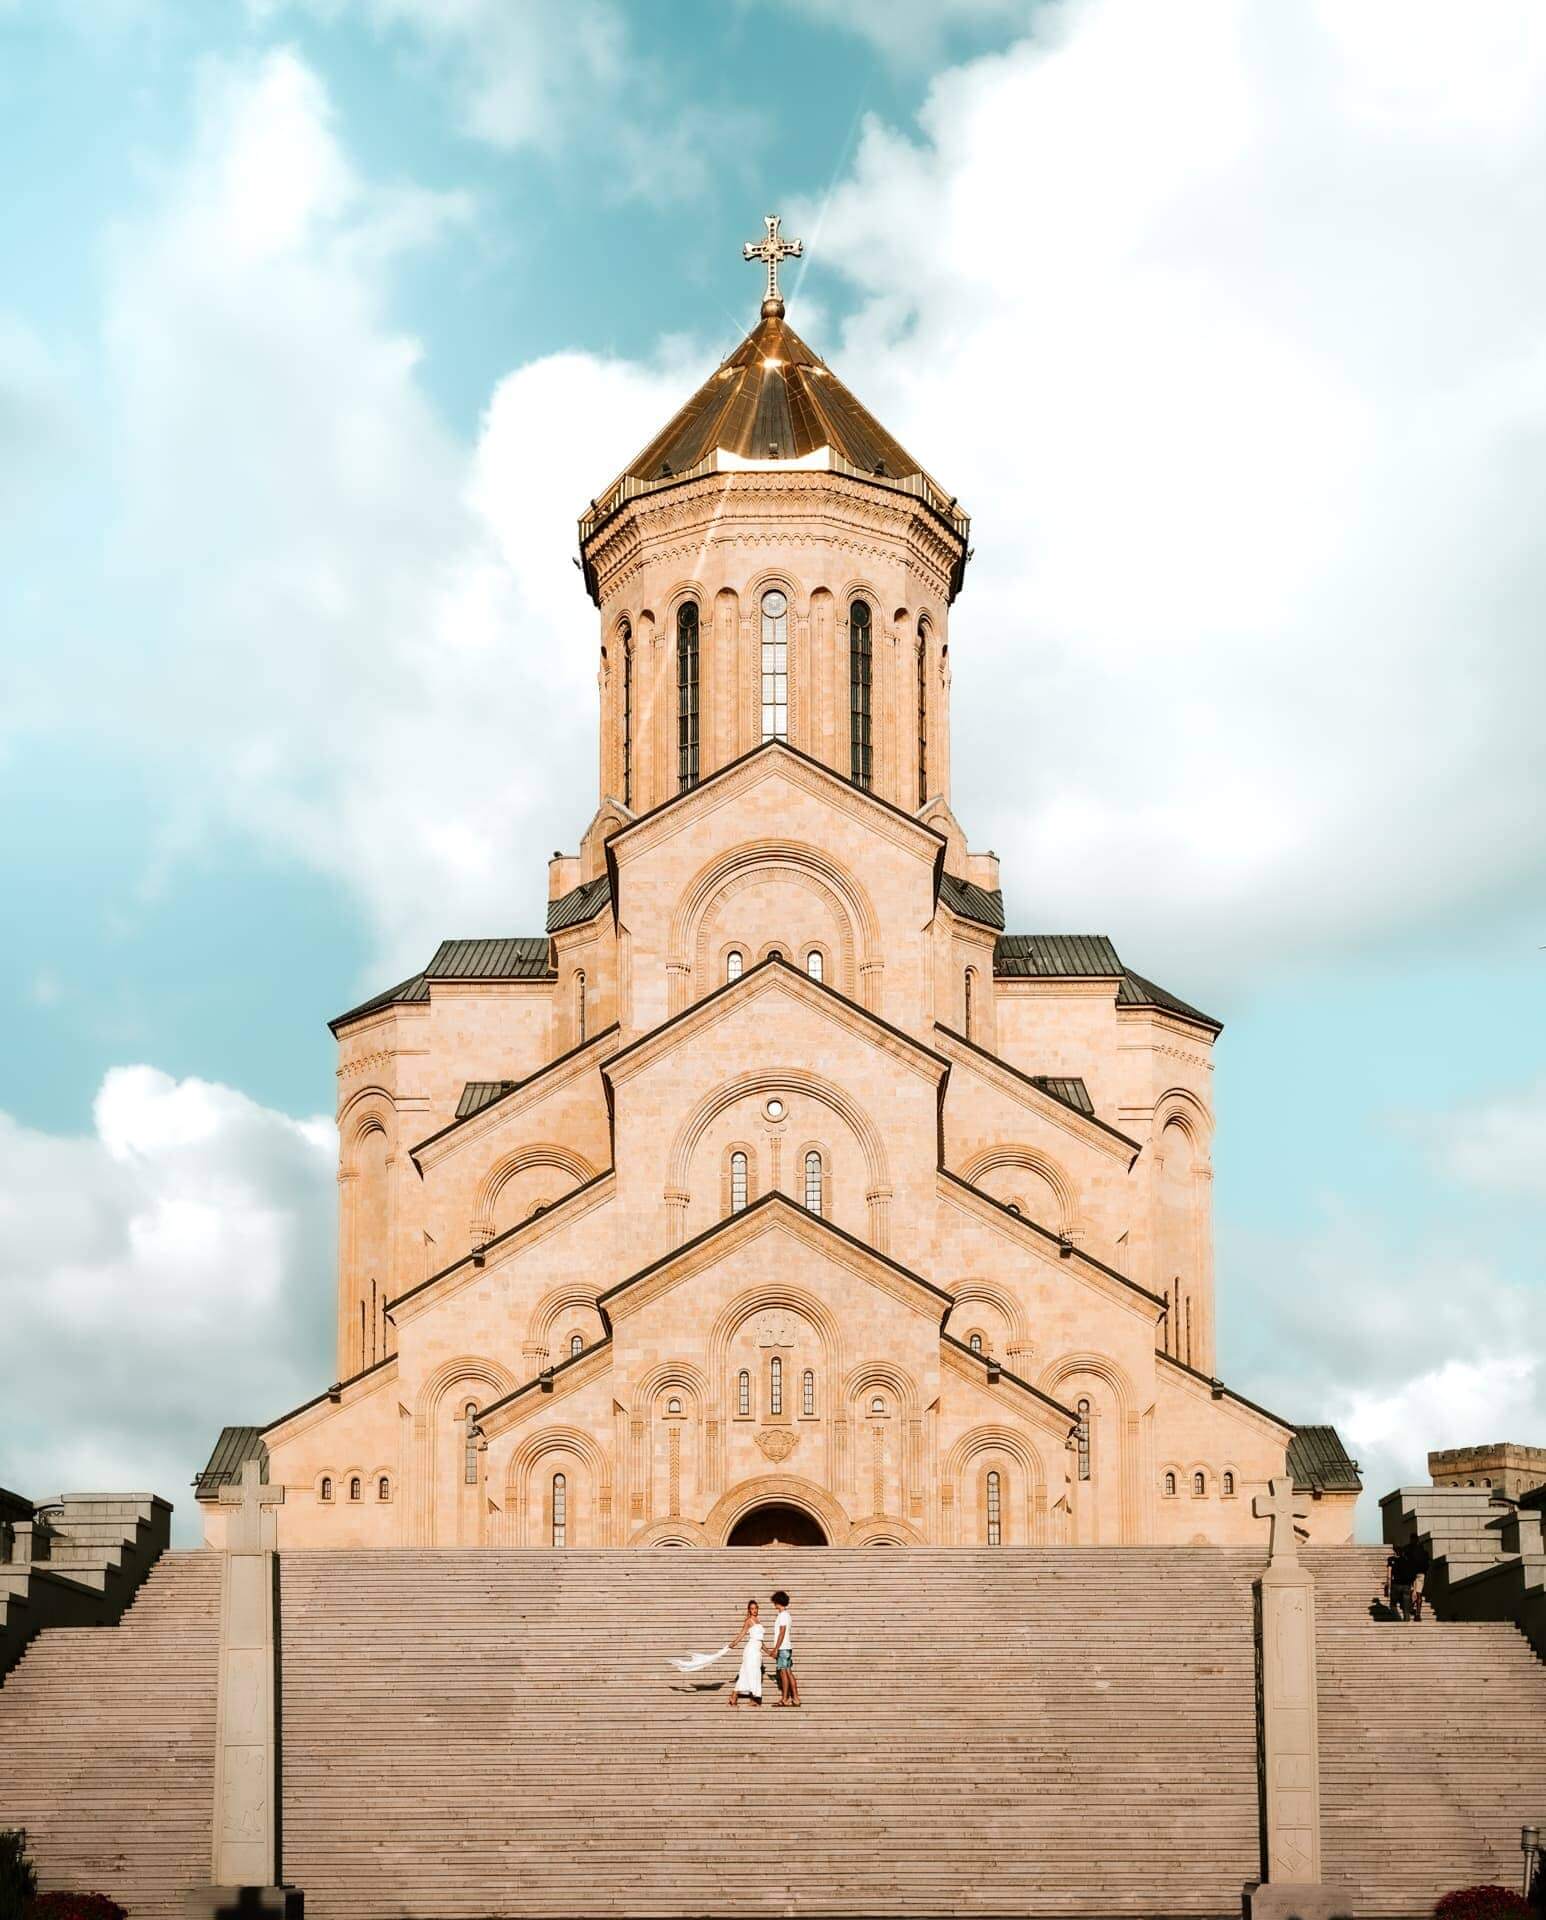 tbilisi georgia Holy Trinit Cathedral